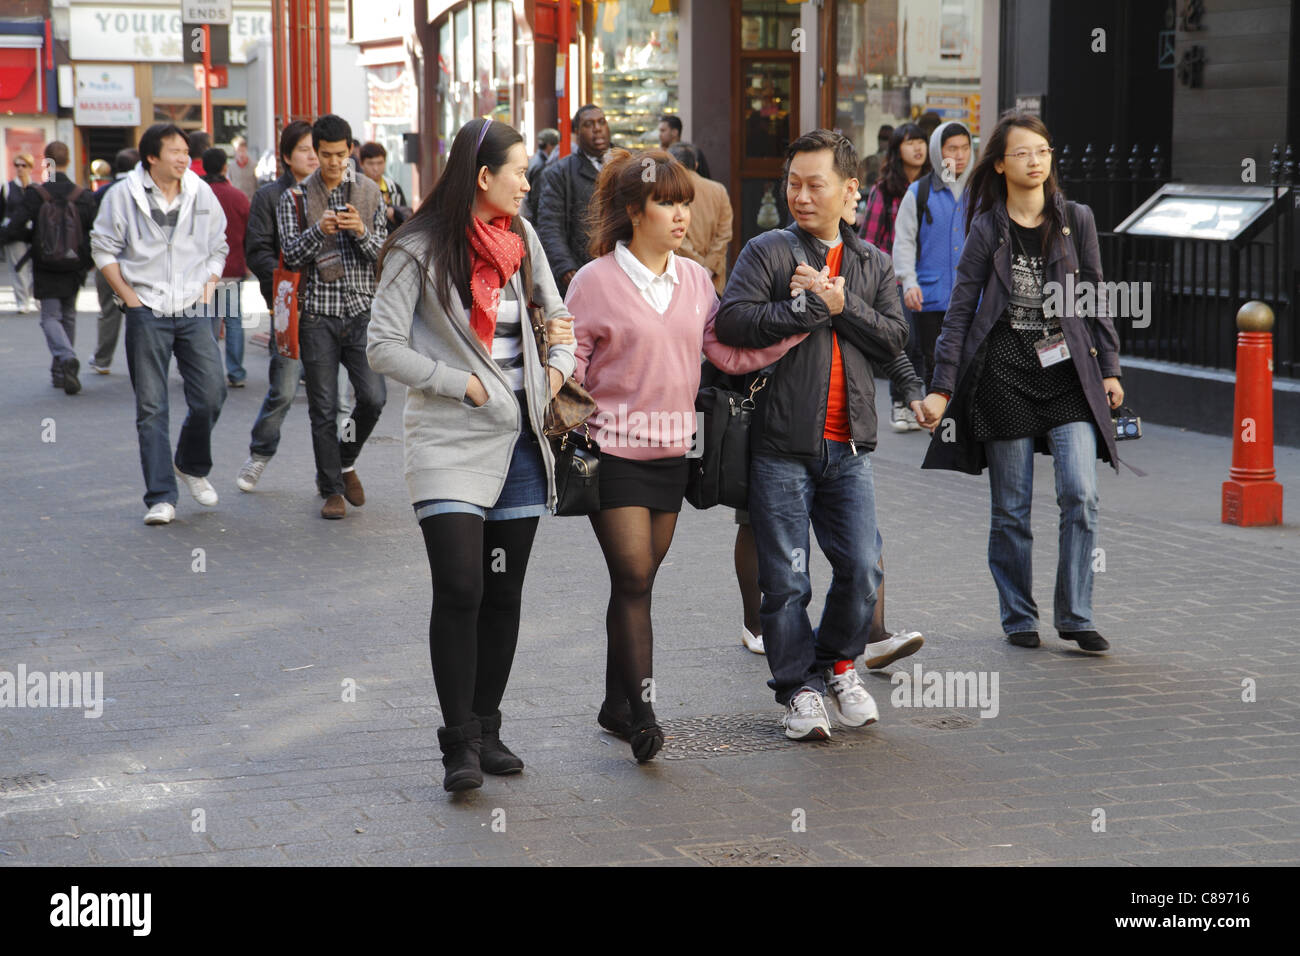 Pedestrians, Gerrard street, London UK Stock Photo